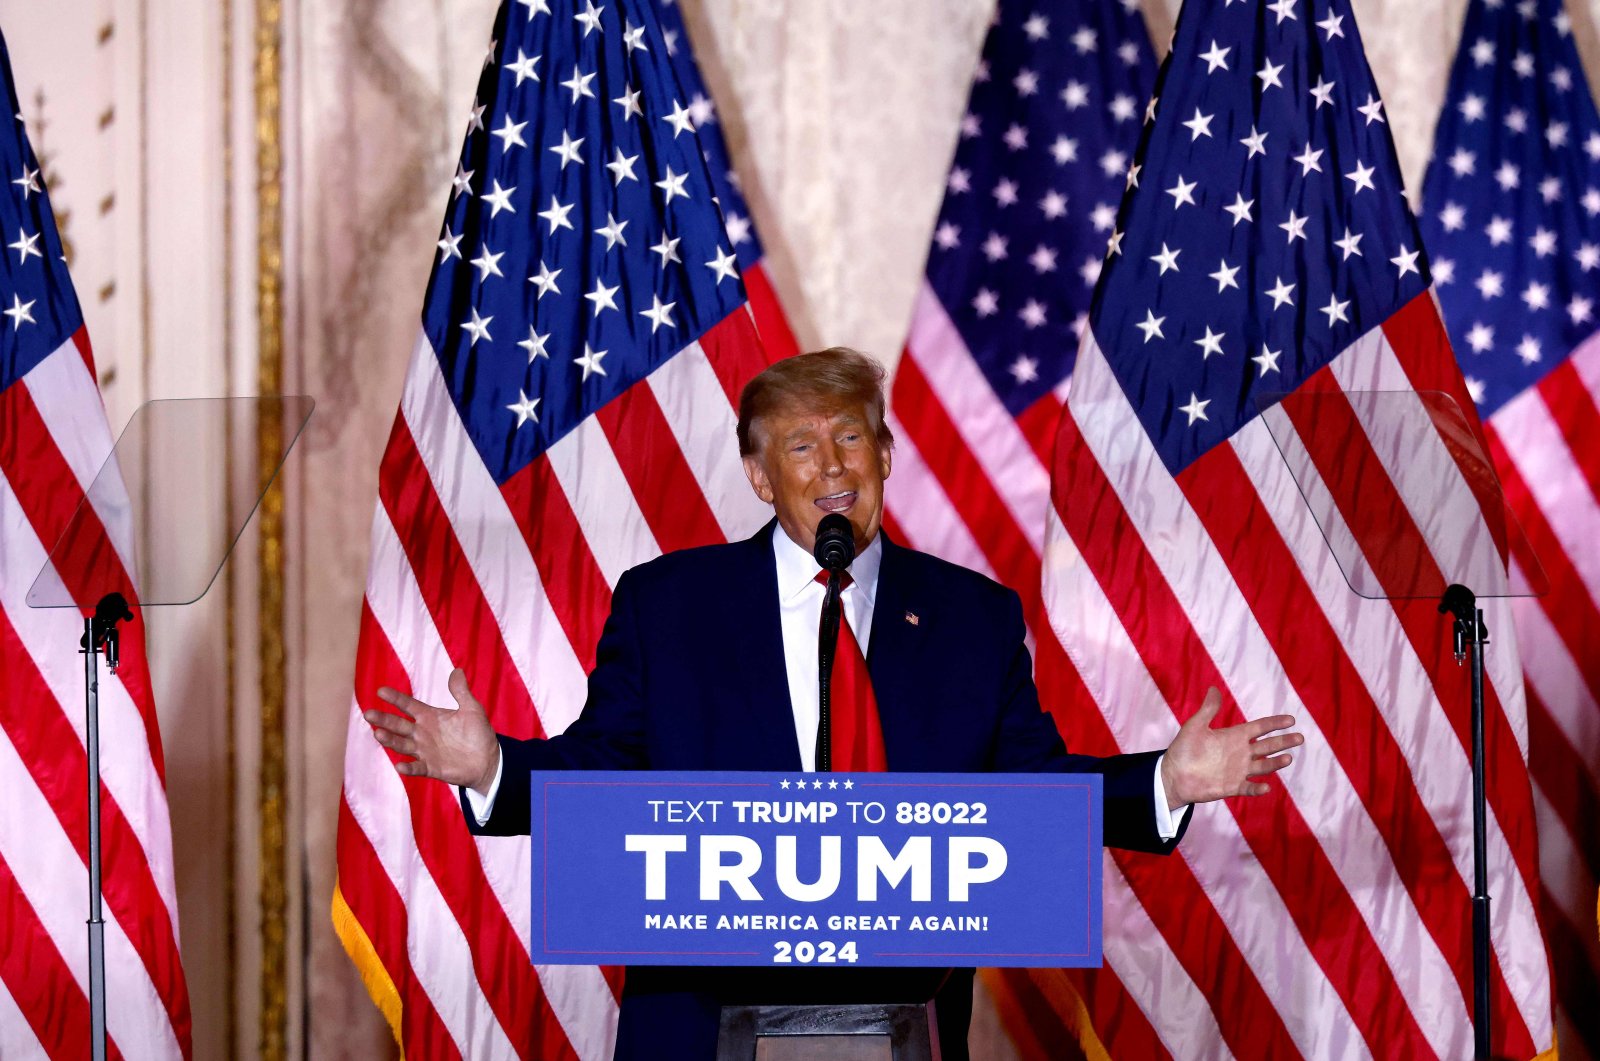 Former U.S. President Donald Trump speaks at the Mar-a-Lago Club in Palm Beach, Florida, Nov. 15, 2022. (AFP File Photo)